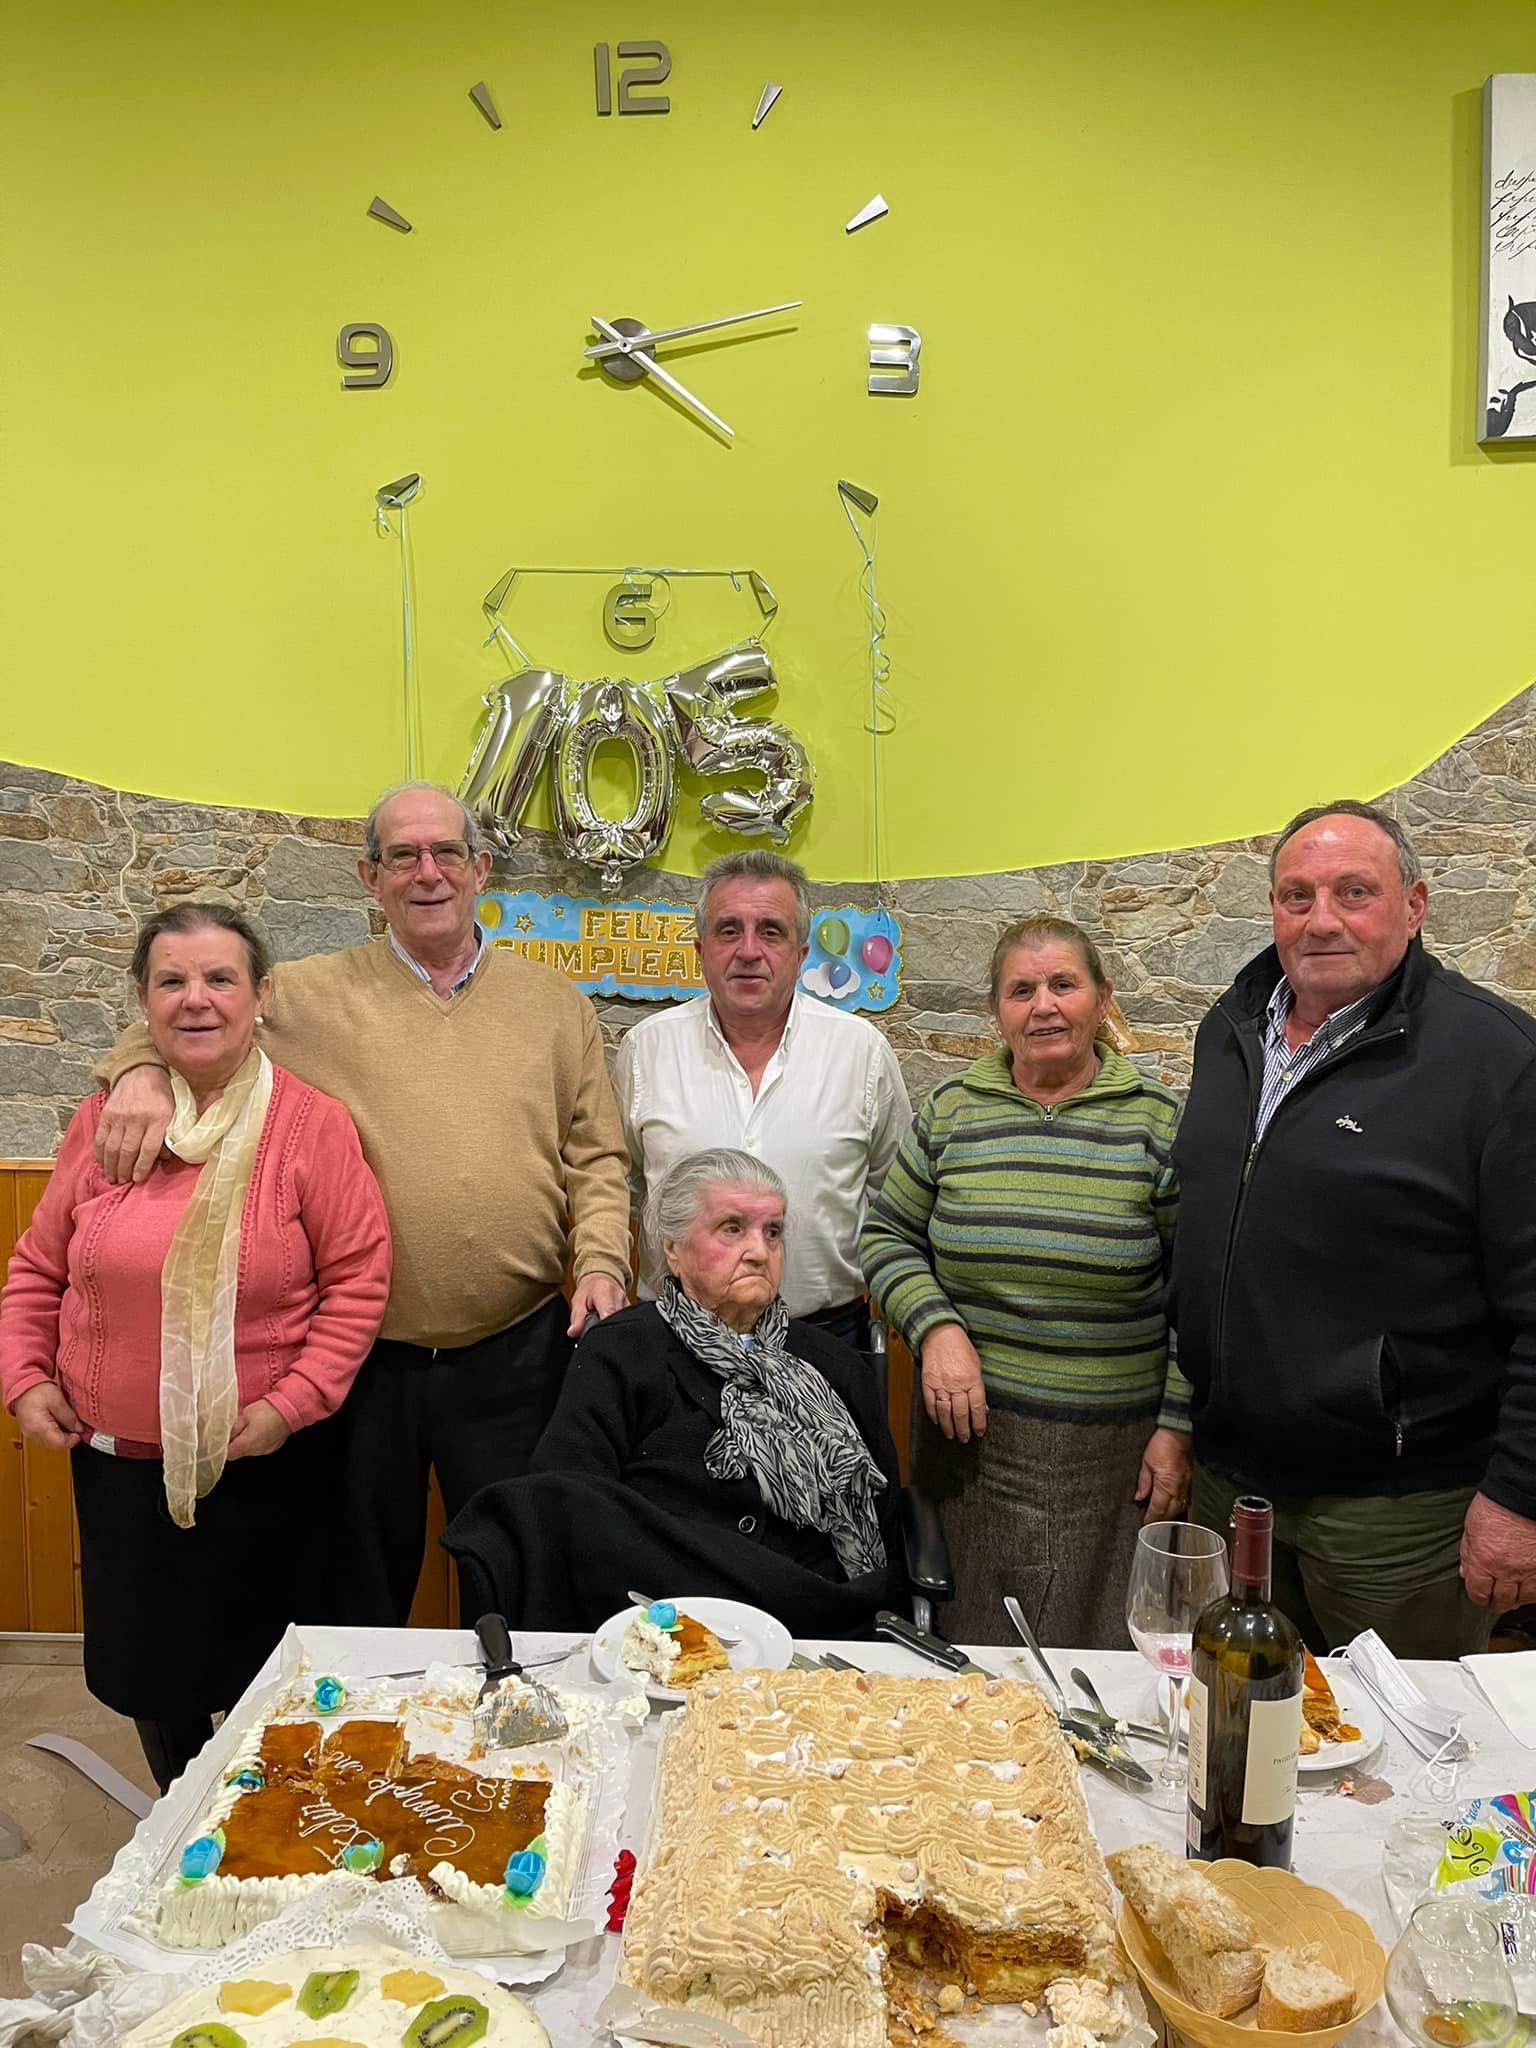 Carmucha celebrando su 105 cumpleaños junto a su familia (Cedida).